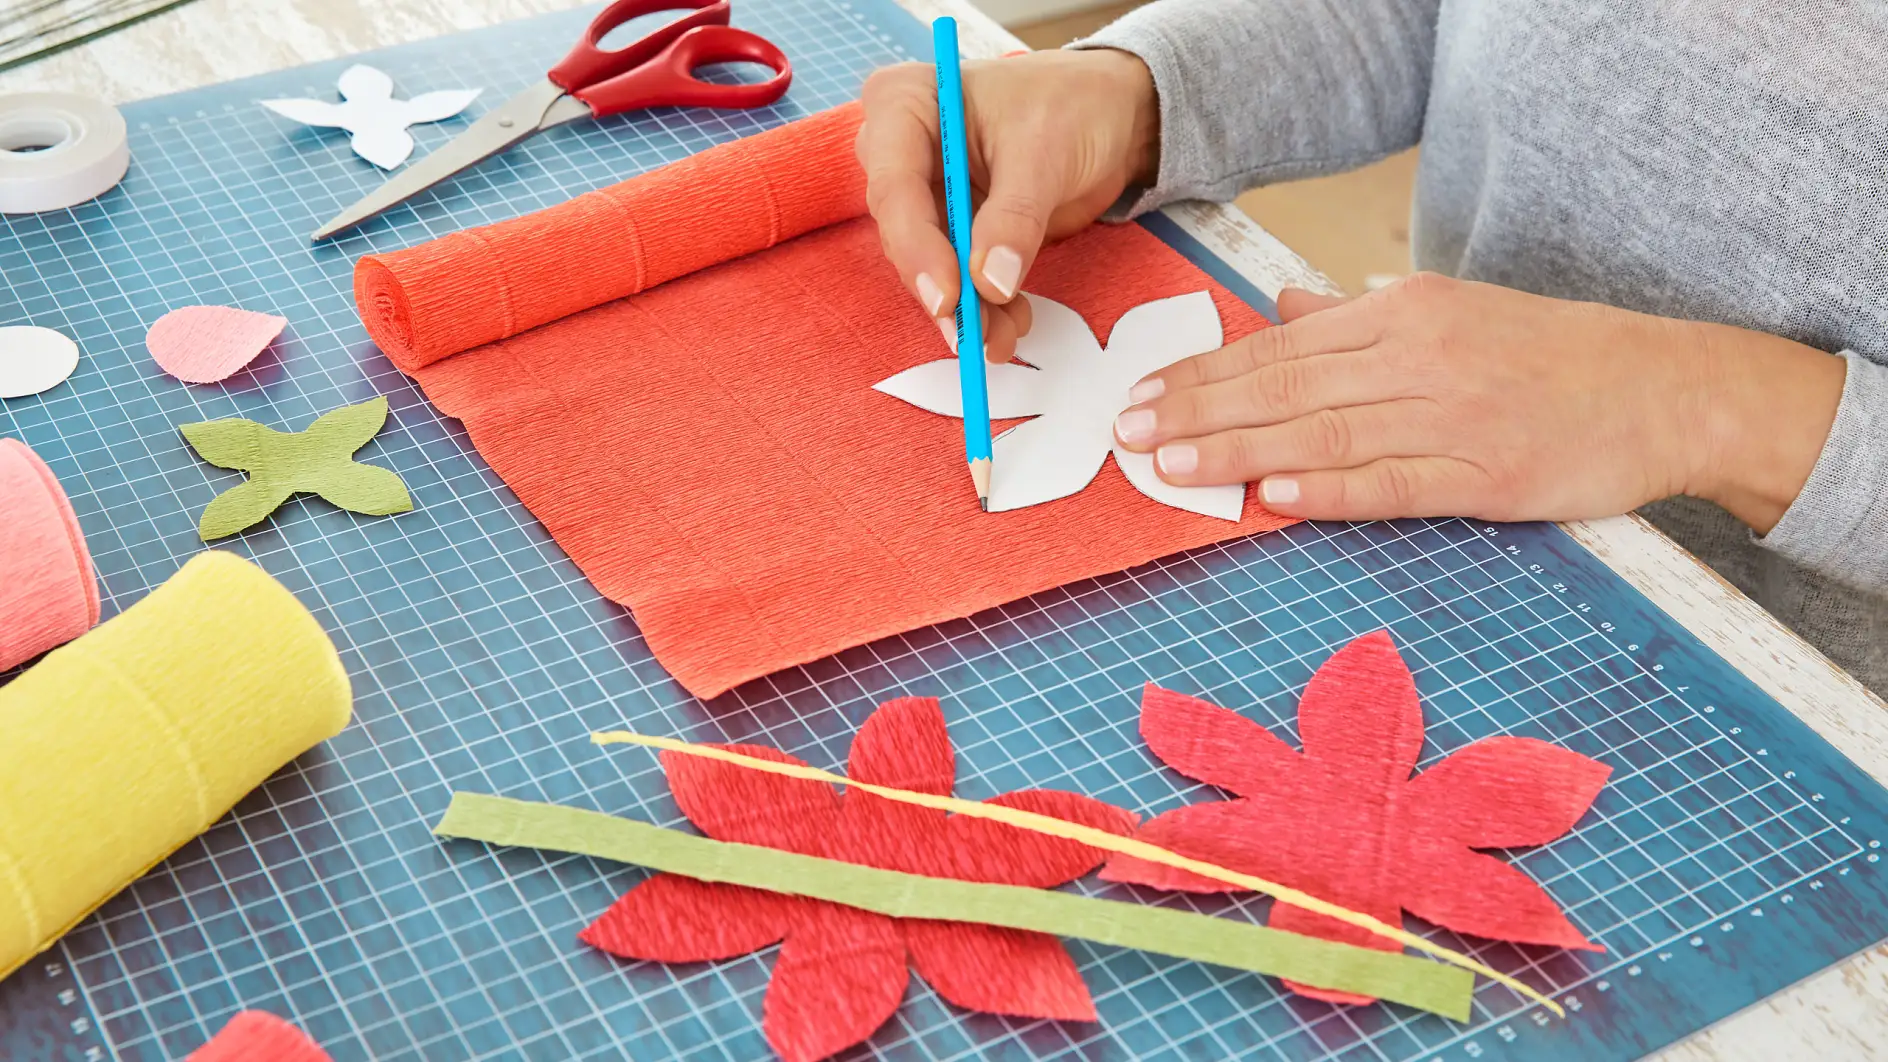 DIY Paper Flower / Step 1: Cut Stencils